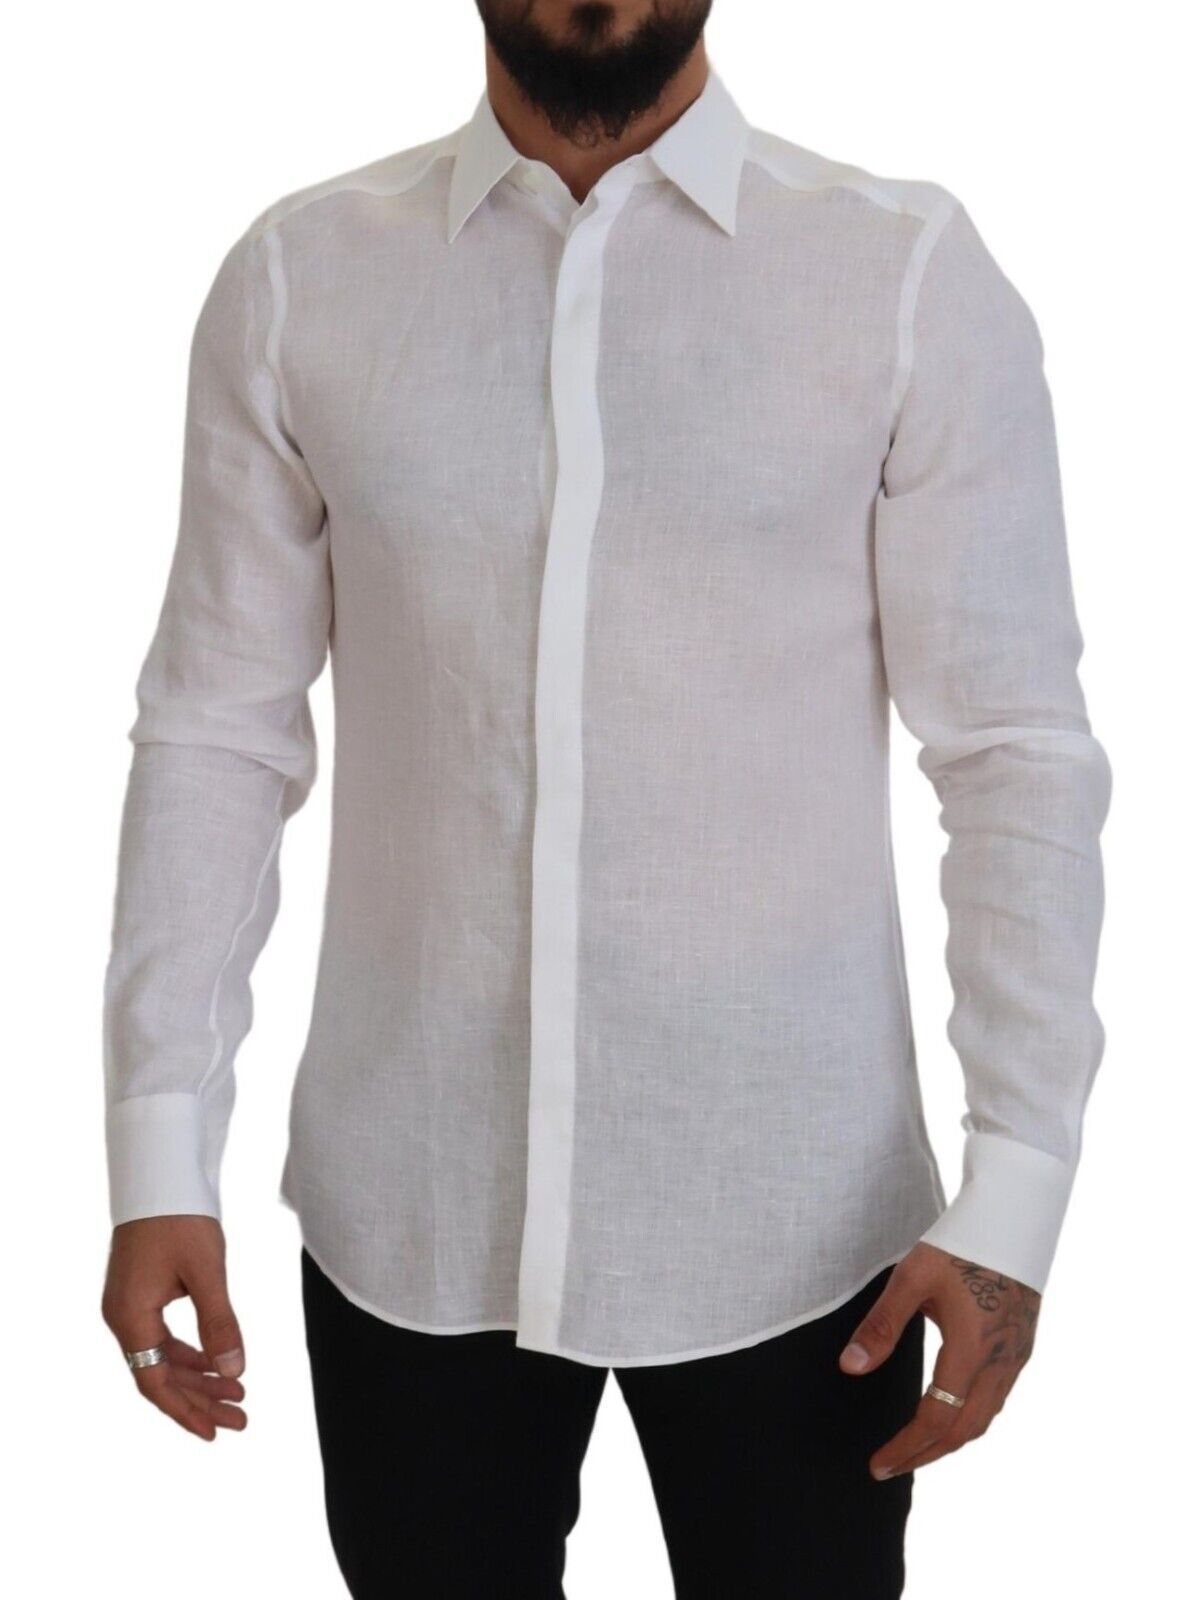 White Linen Flax Dress Formal MARTINI Shirt